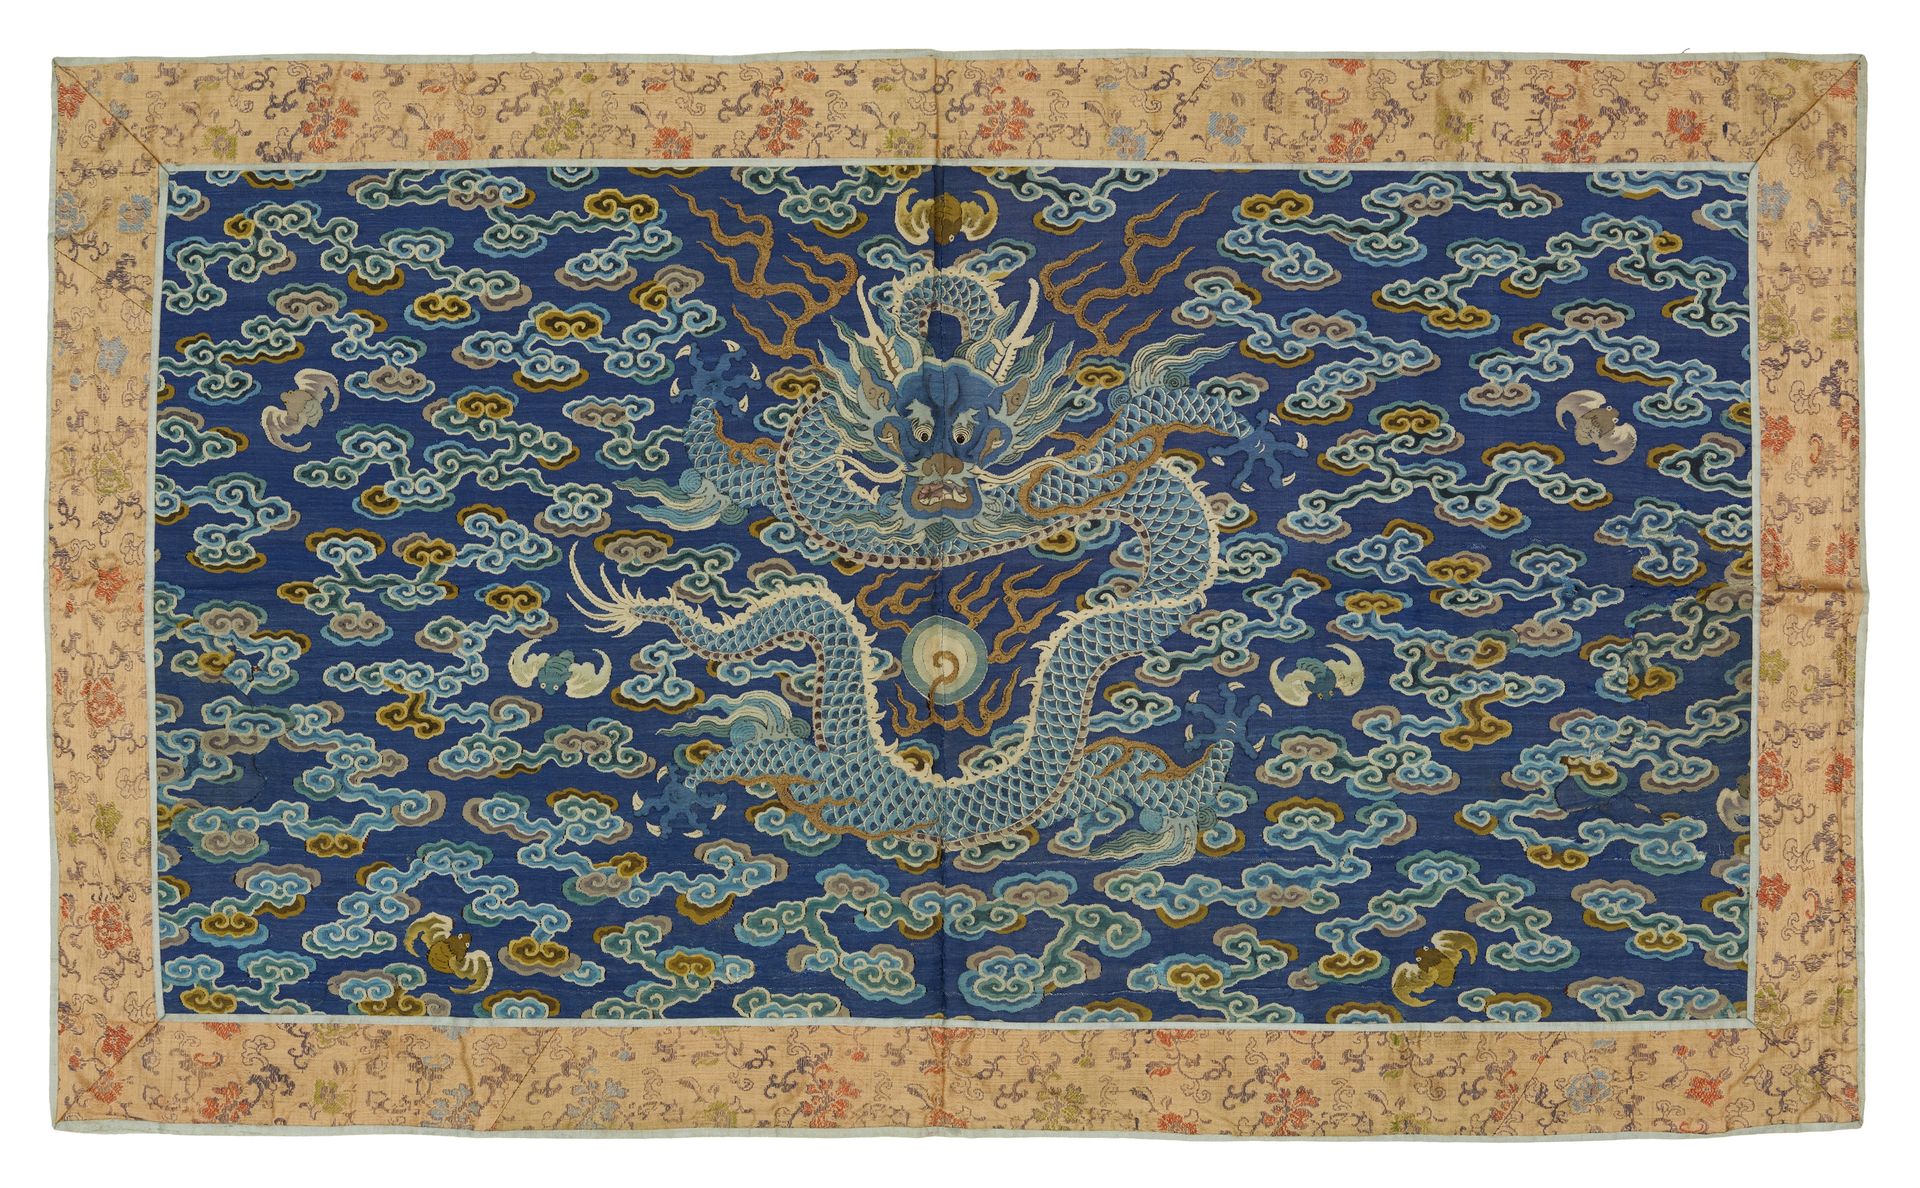 Null Fragment of a dragon robe. Silk fabric in kesi technique. 18th/19th c.



R&hellip;